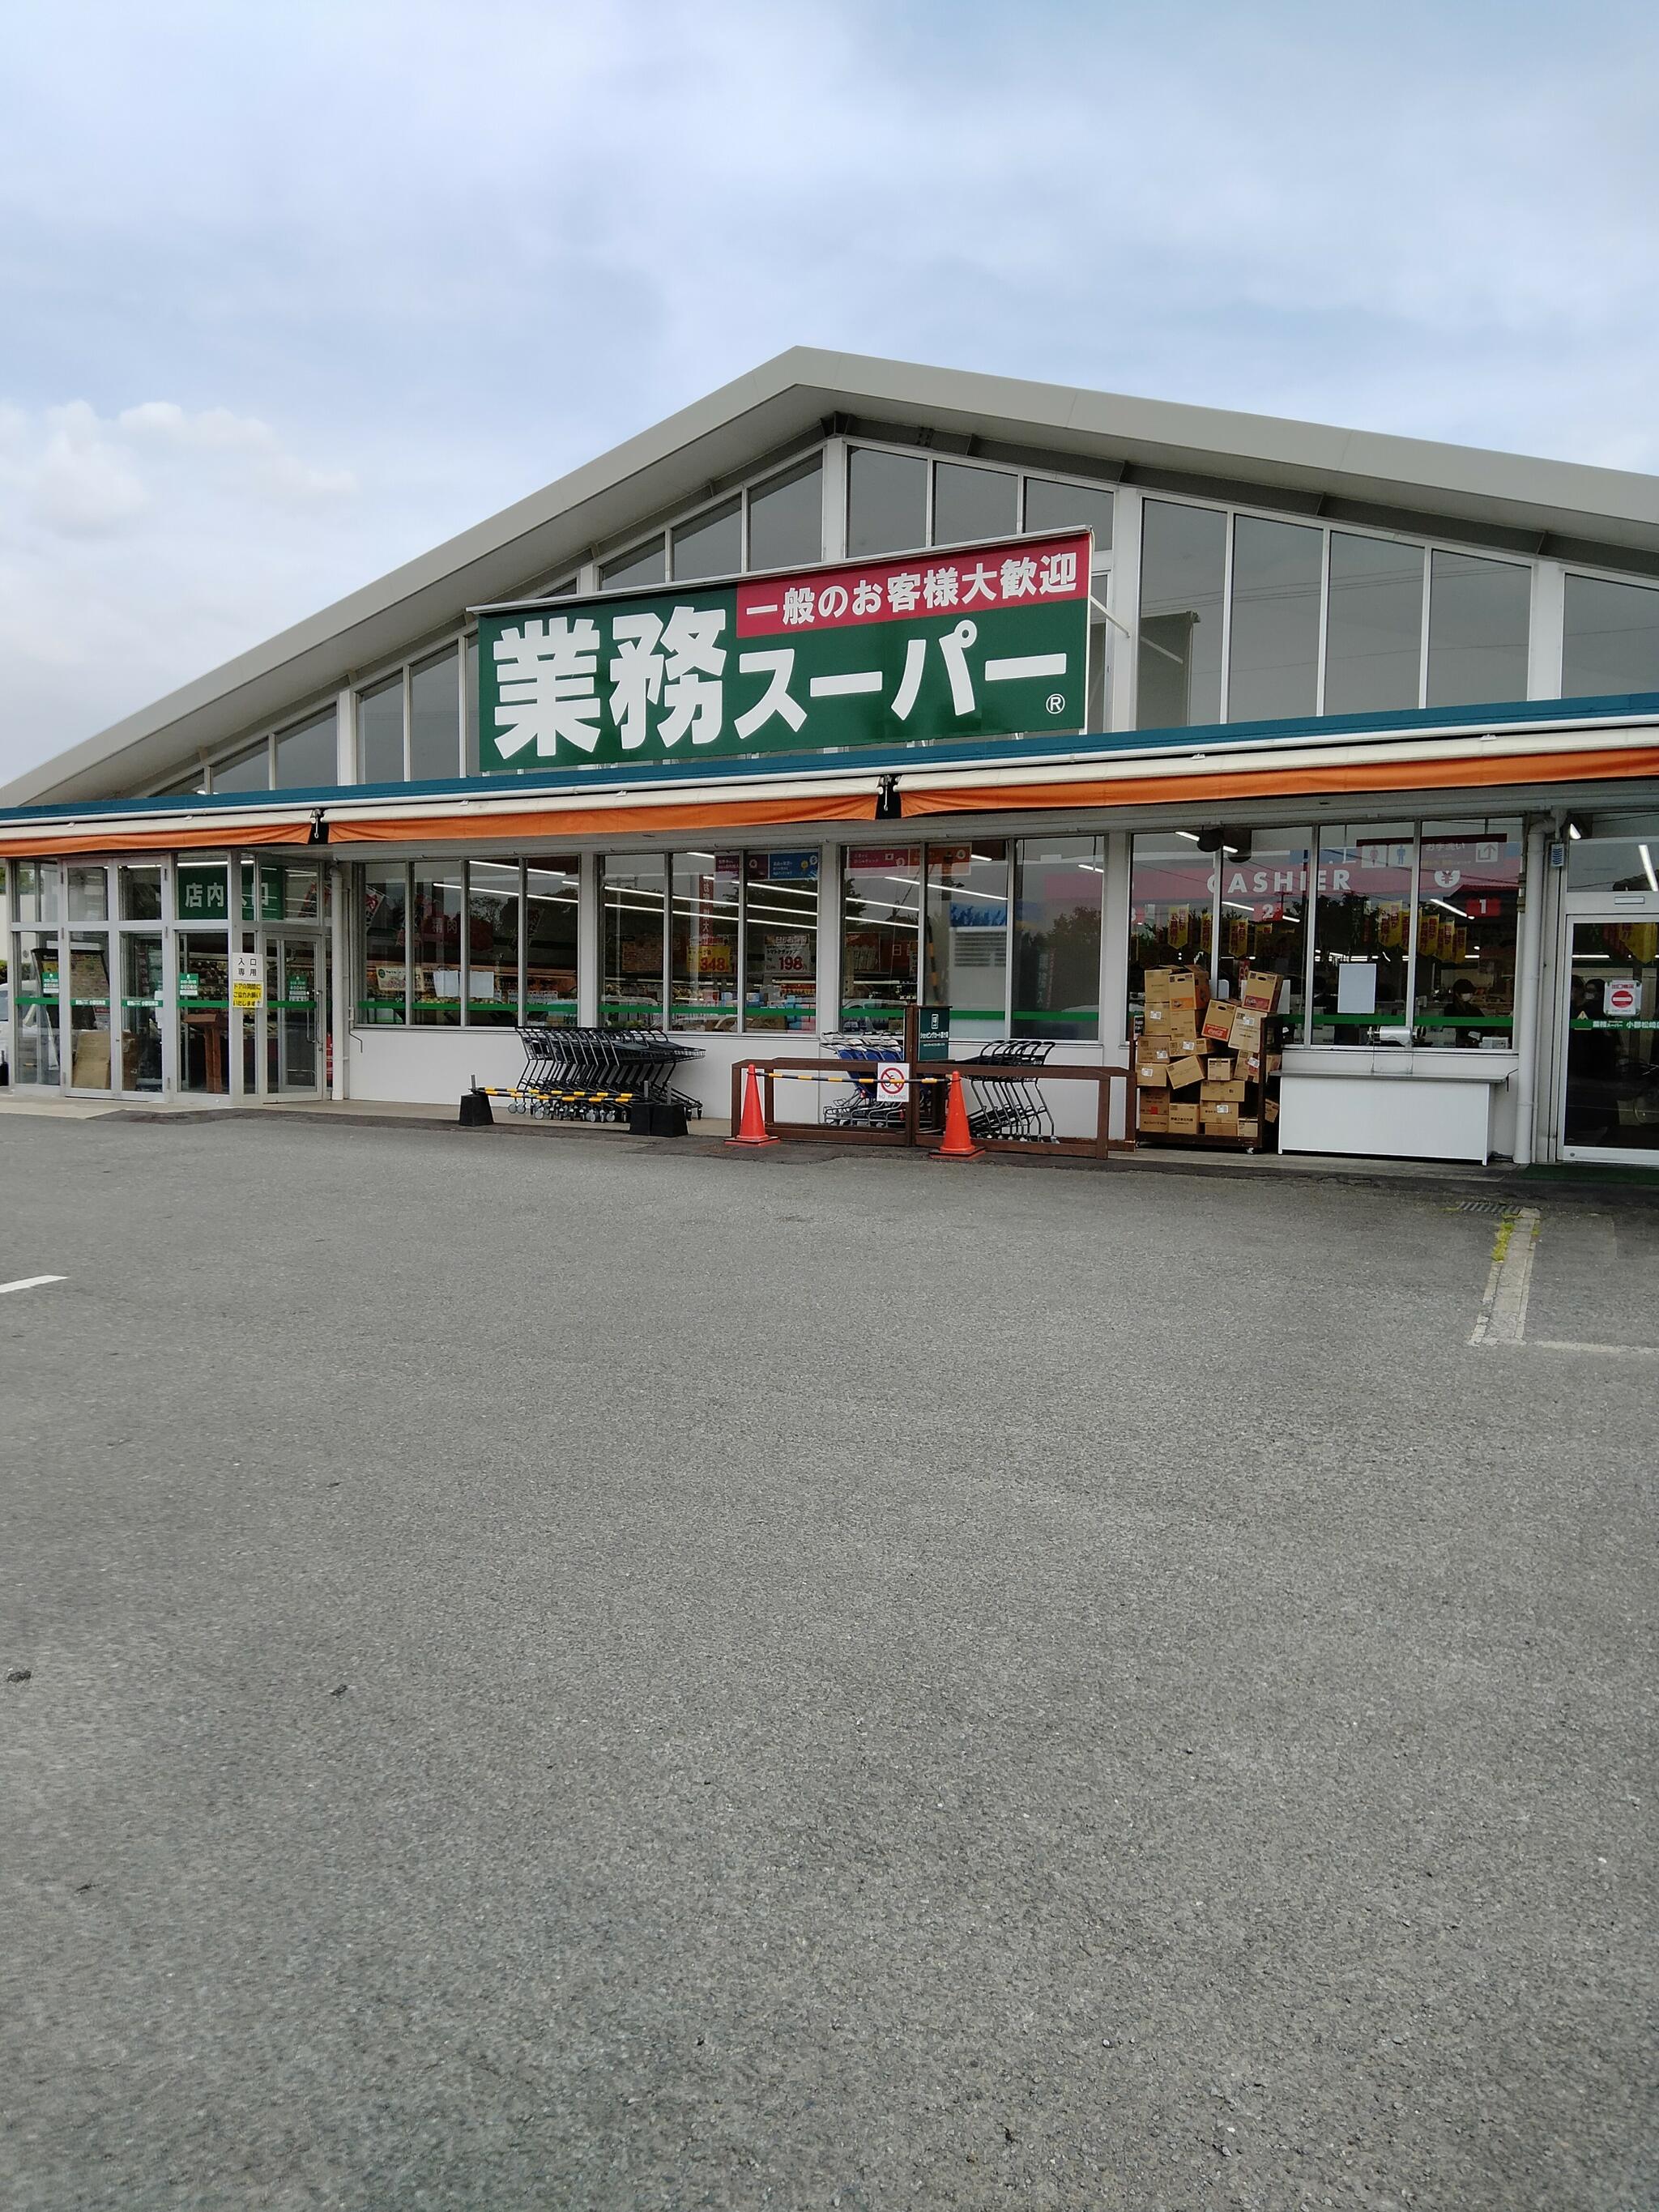 業務スーパー 小郡松崎店の代表写真8